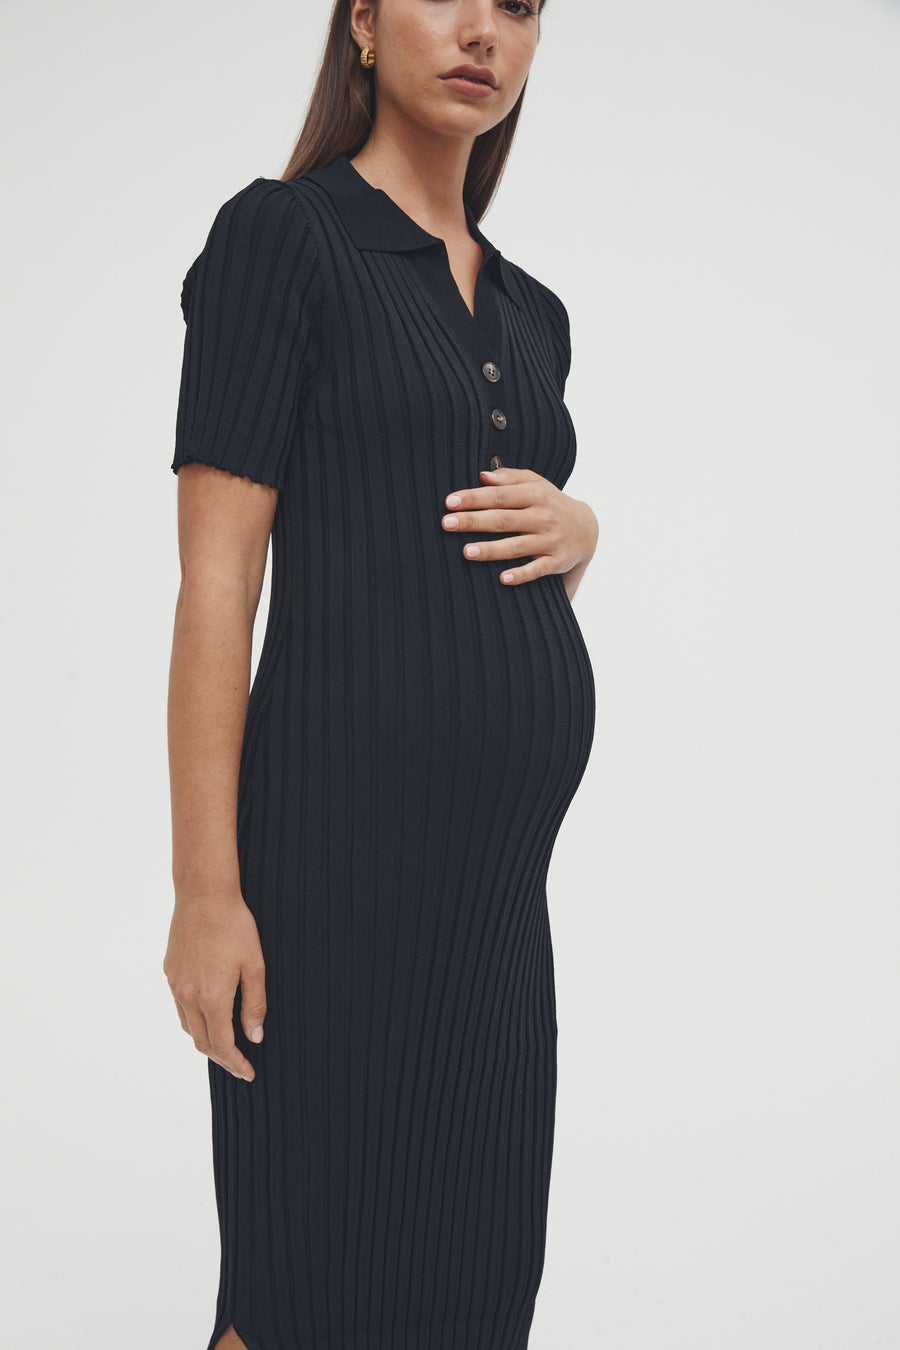 Black Tie Maternity Dress 2